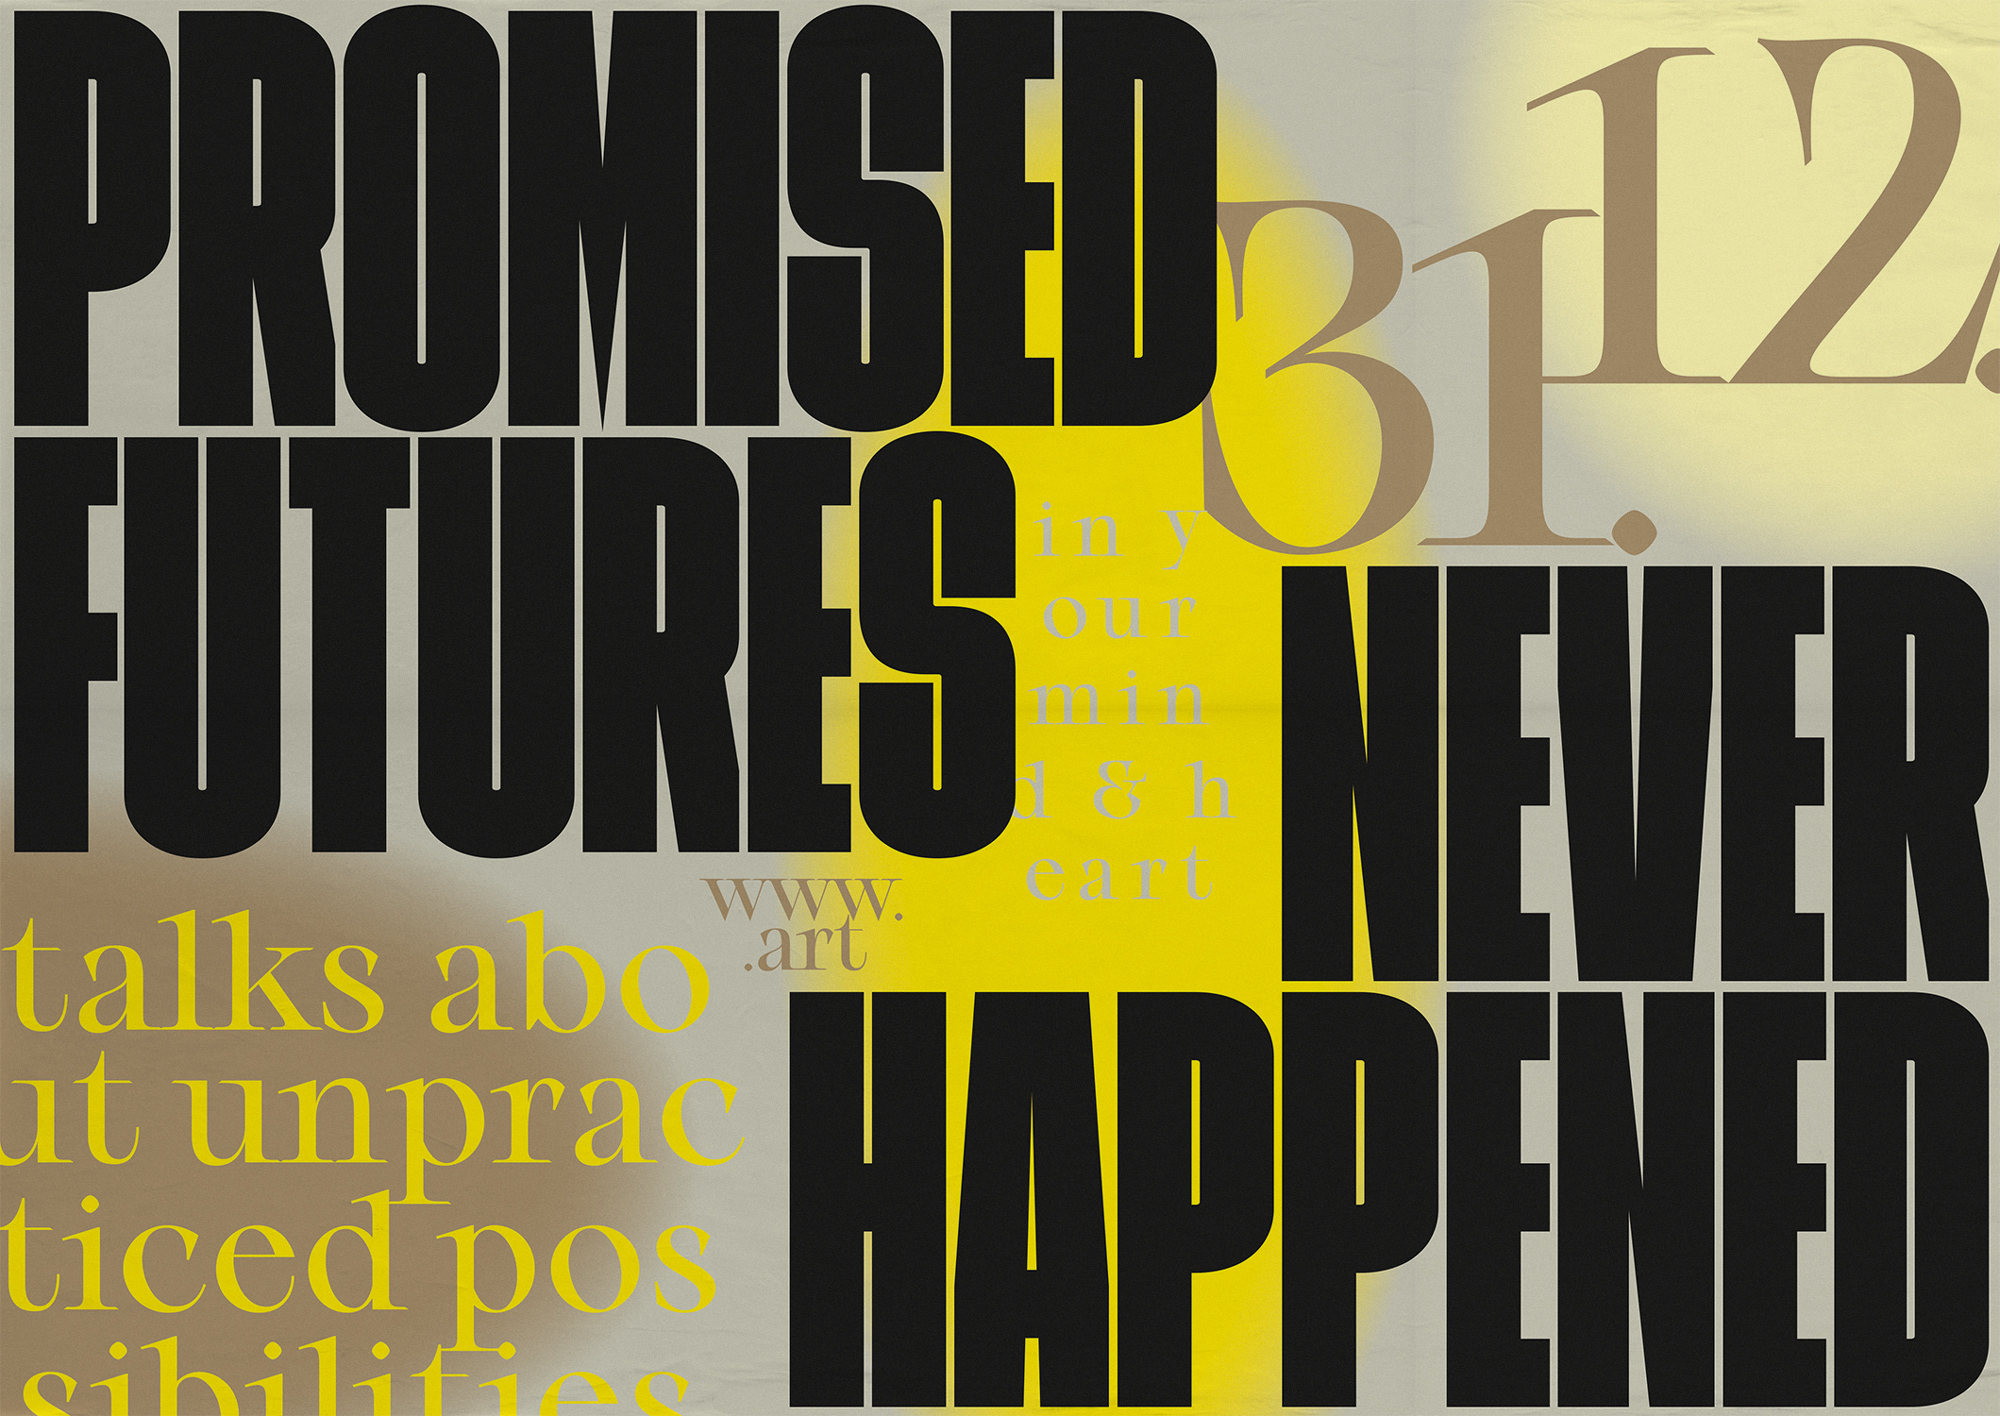 Karsten Rohrbeck: Promised Futures Never Happened (18/1 Poster)